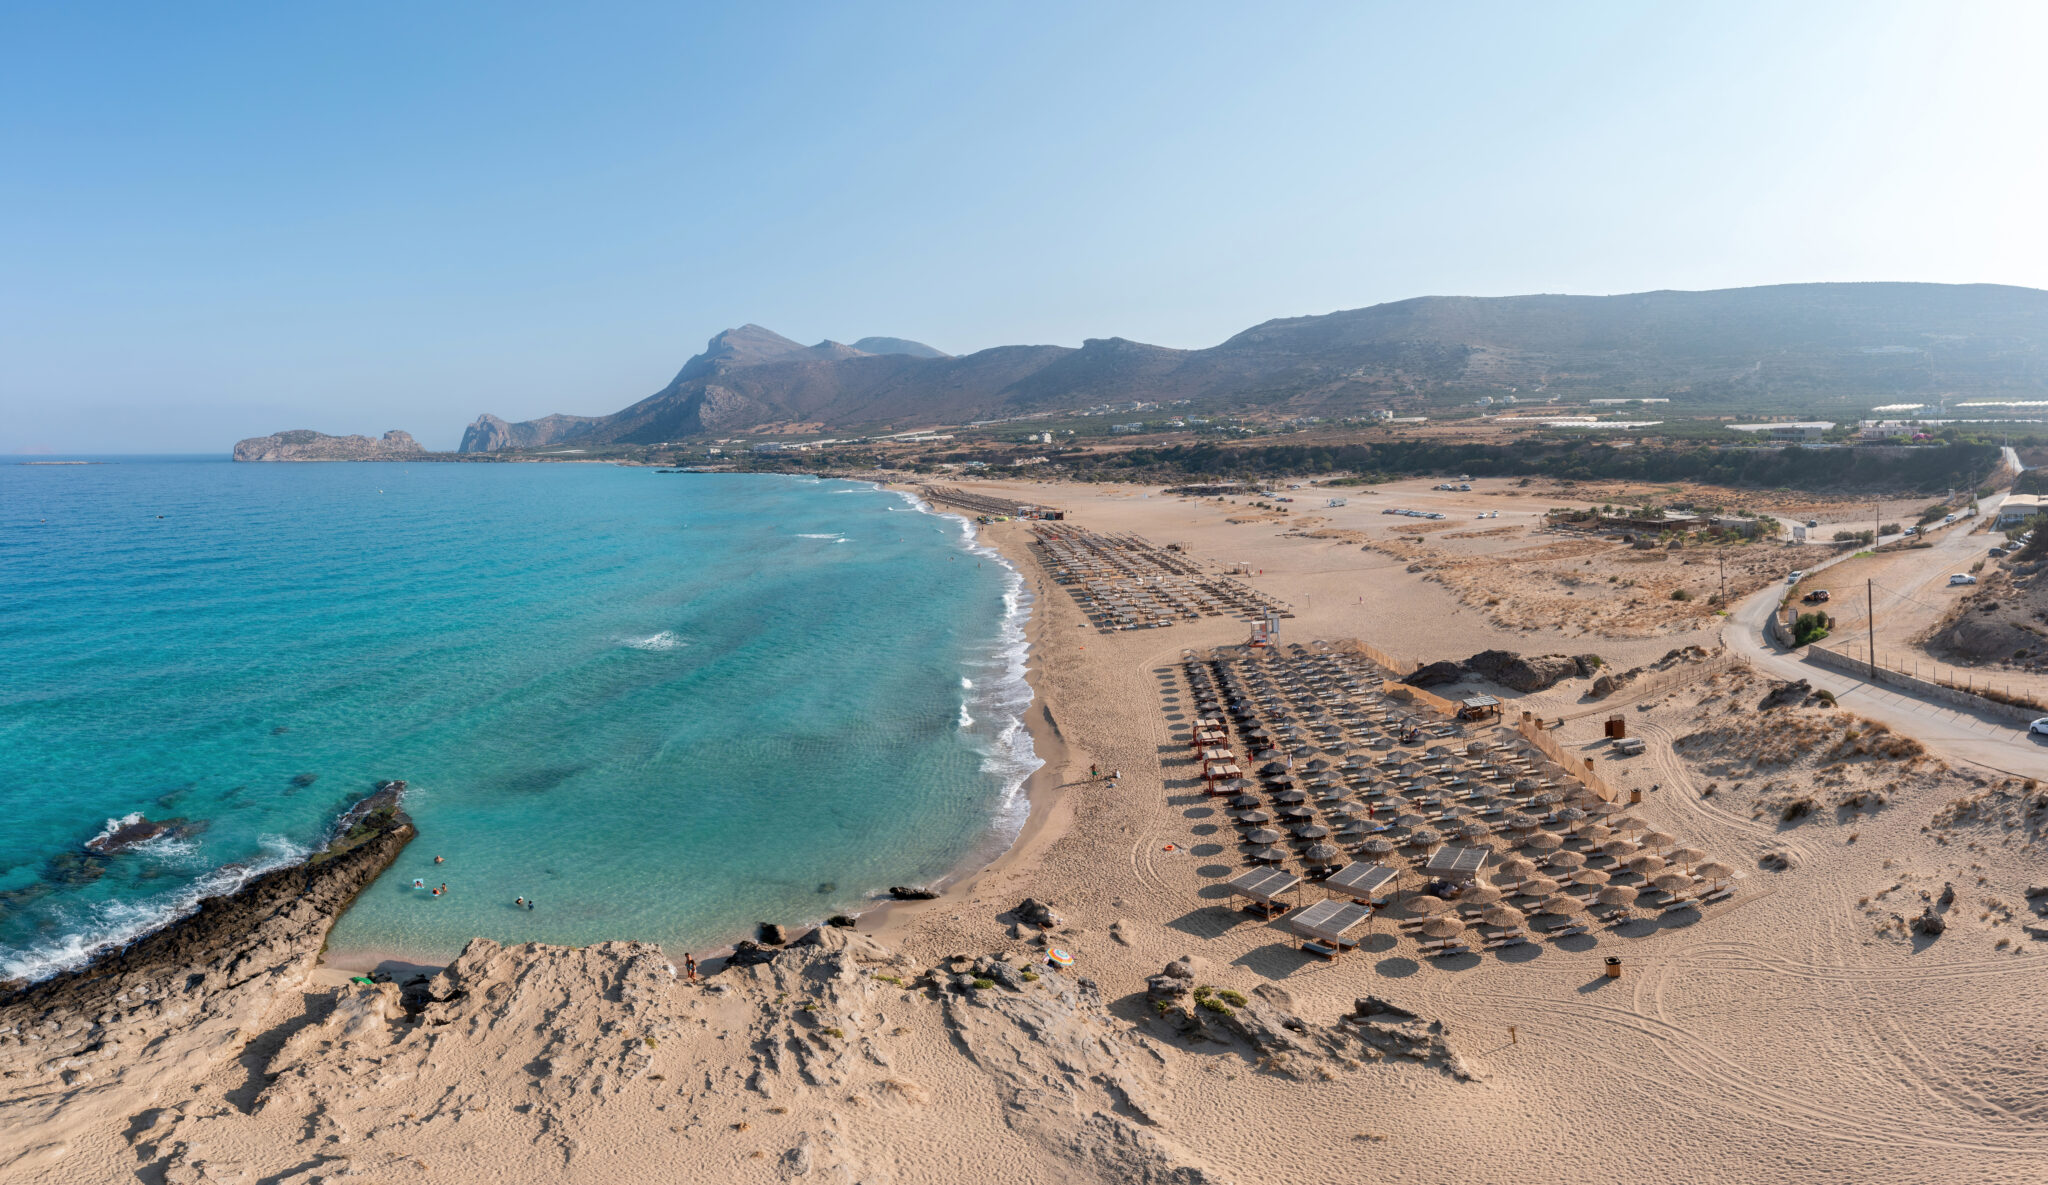 Visiting Crete’s beaches by car